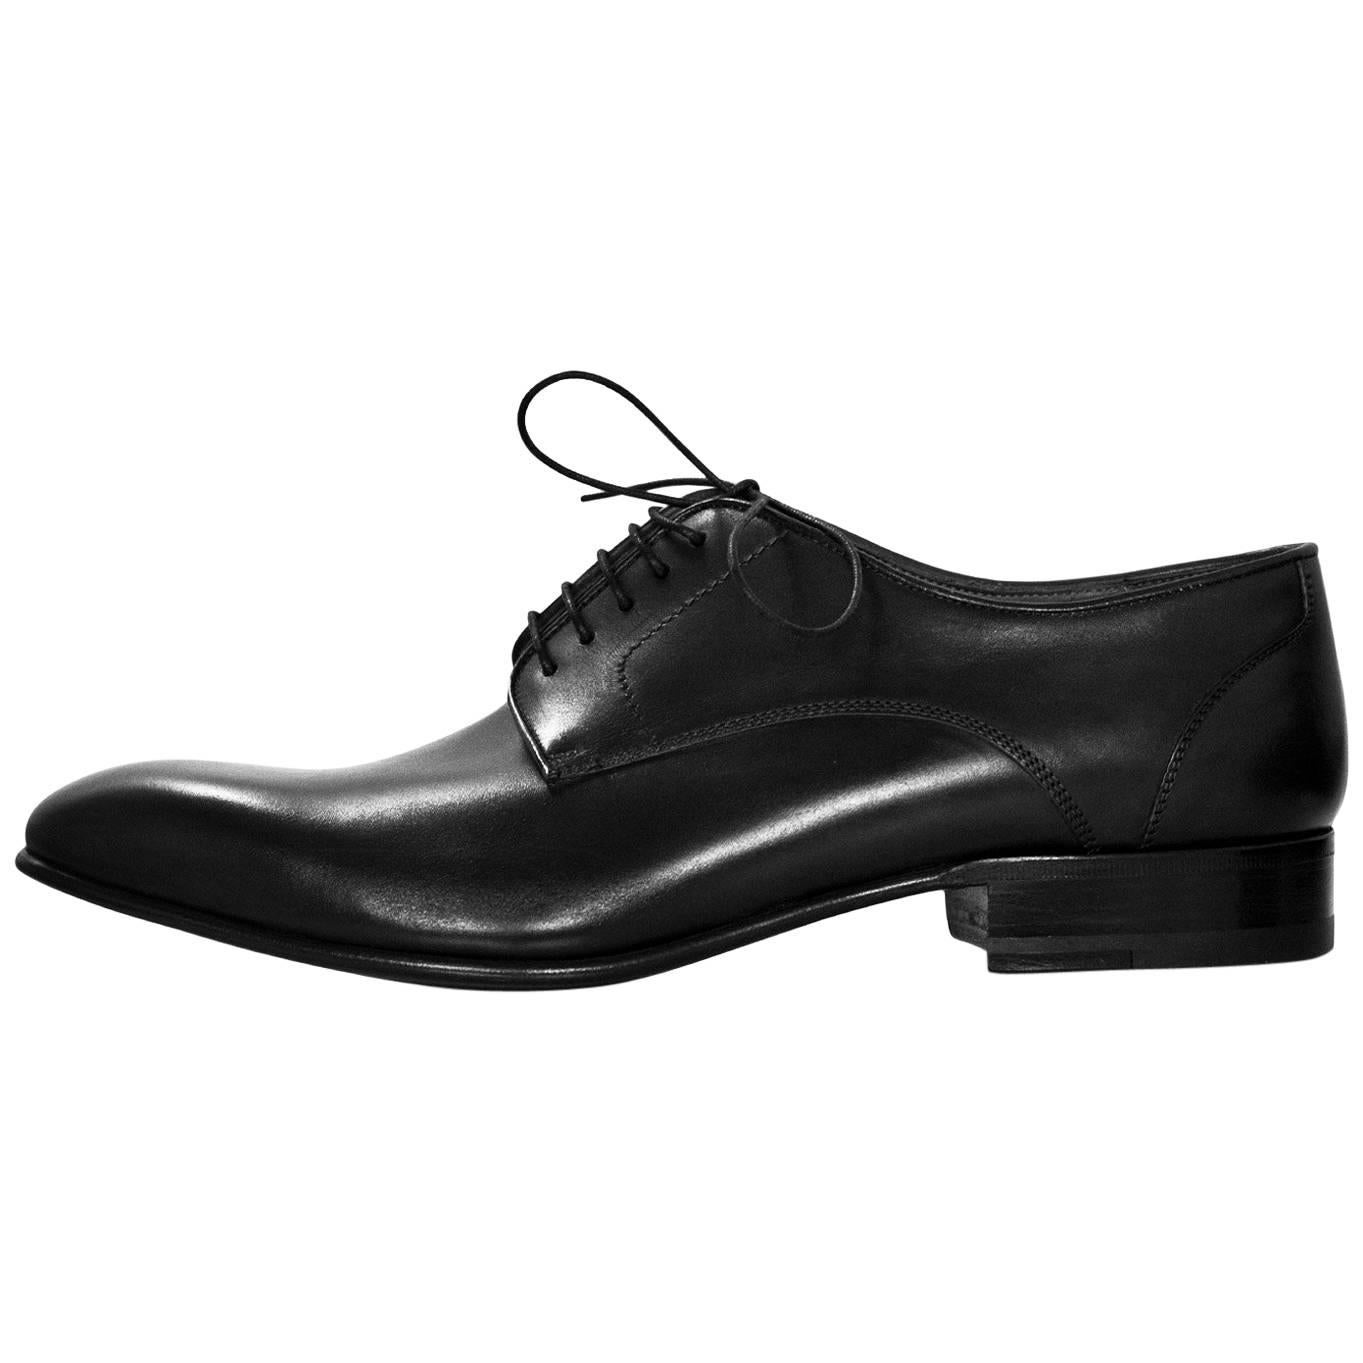 Lanvin Men's Black Leather Oxford Shoes Sz 8 NIB